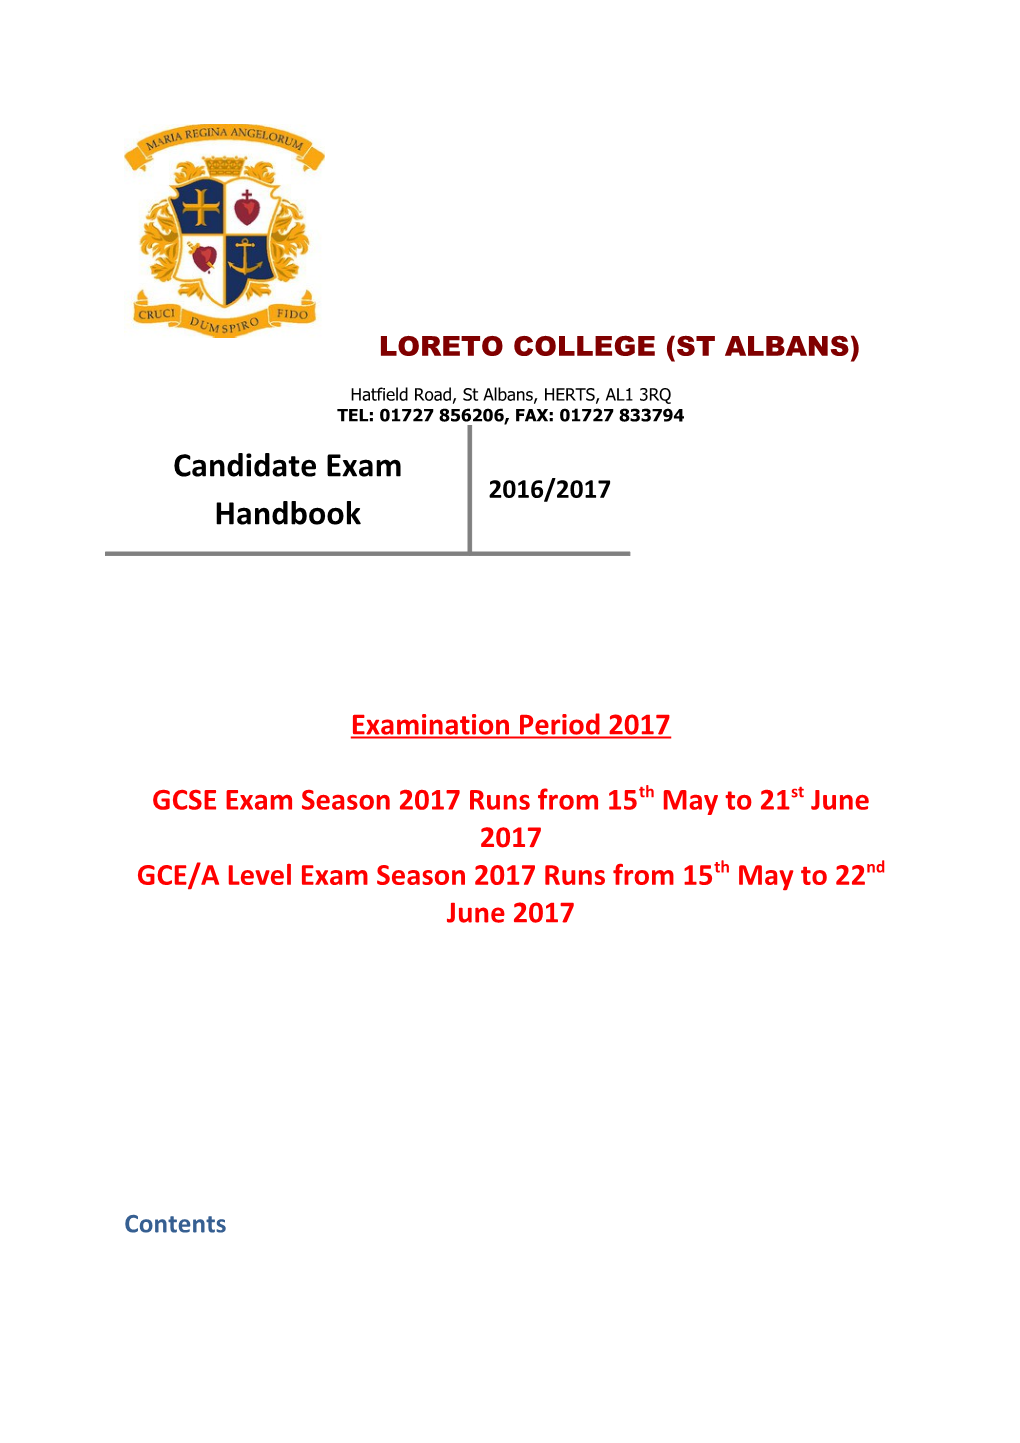 Candidate Exam Handbook